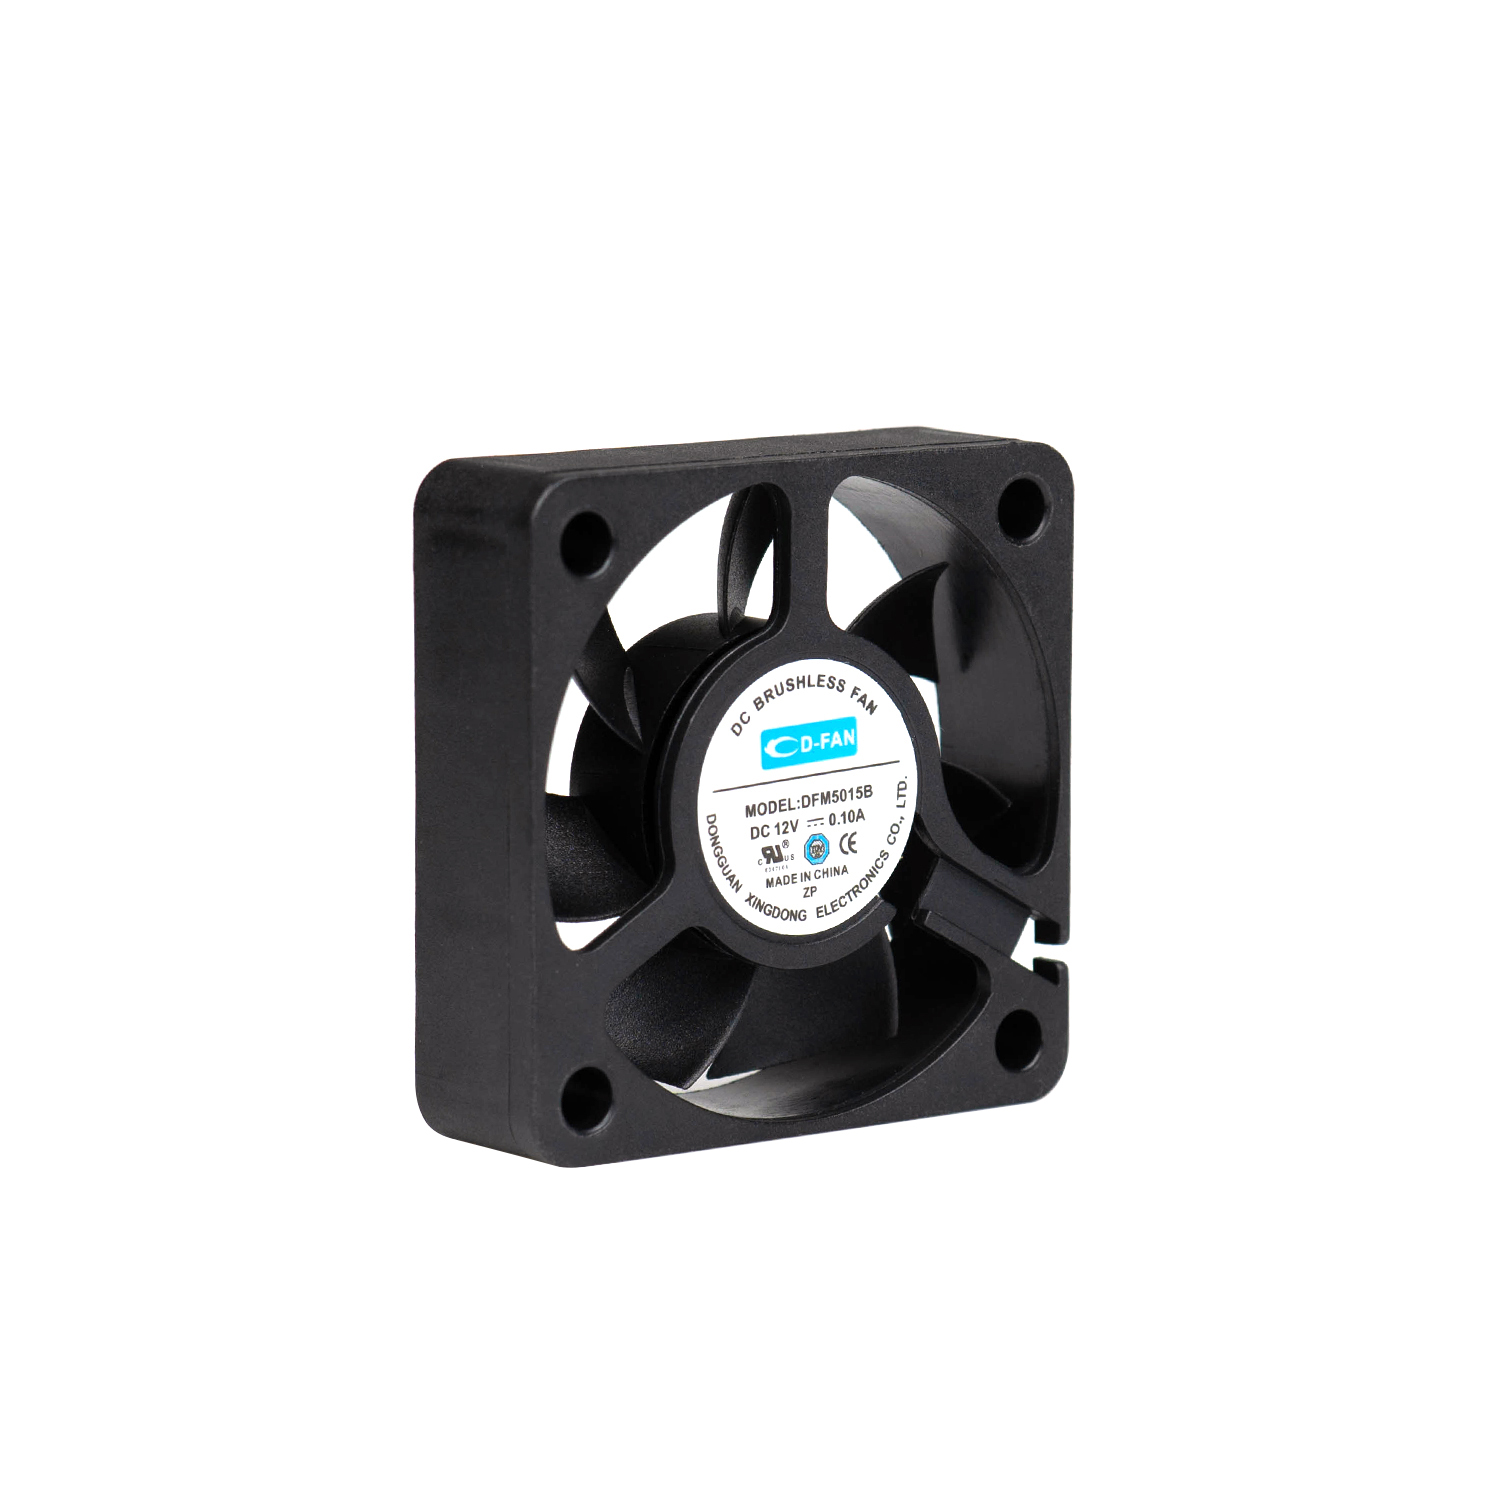 DFH5015B dc axial fan 4200 rpm high cfm 12v cooling fan